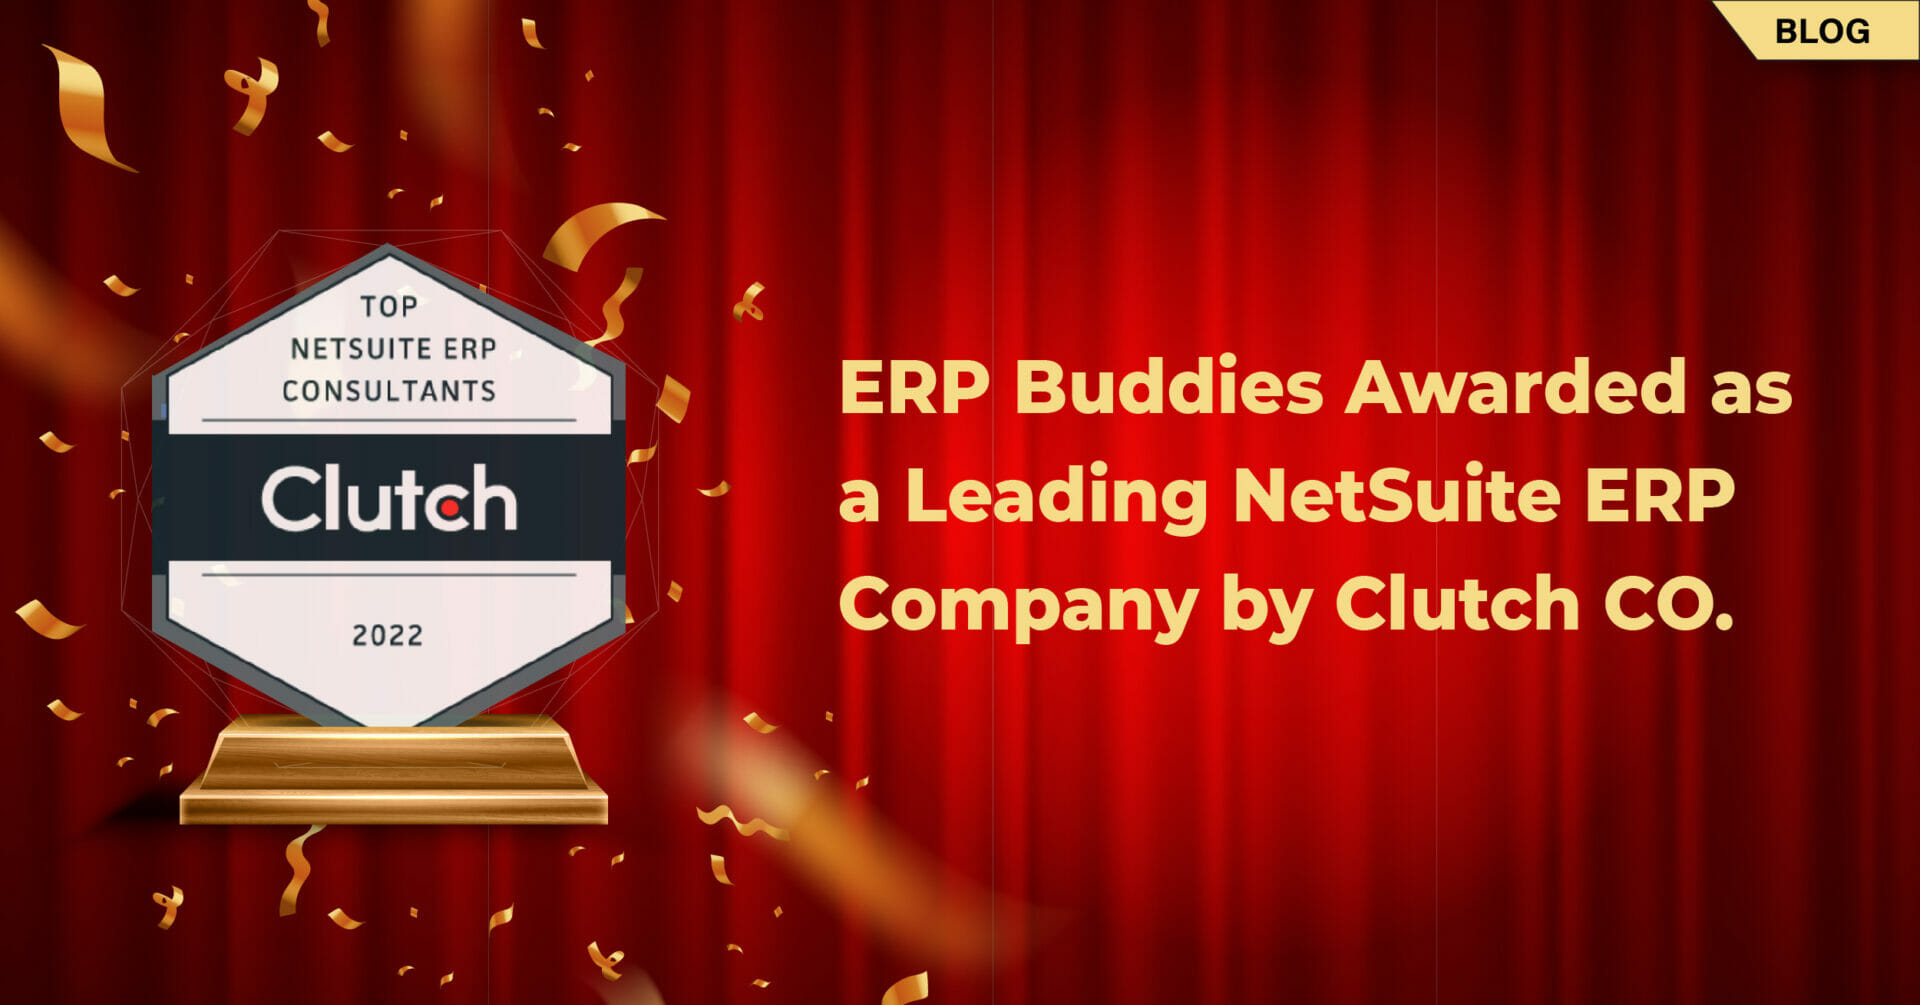 Leading NetSuite ERP Company